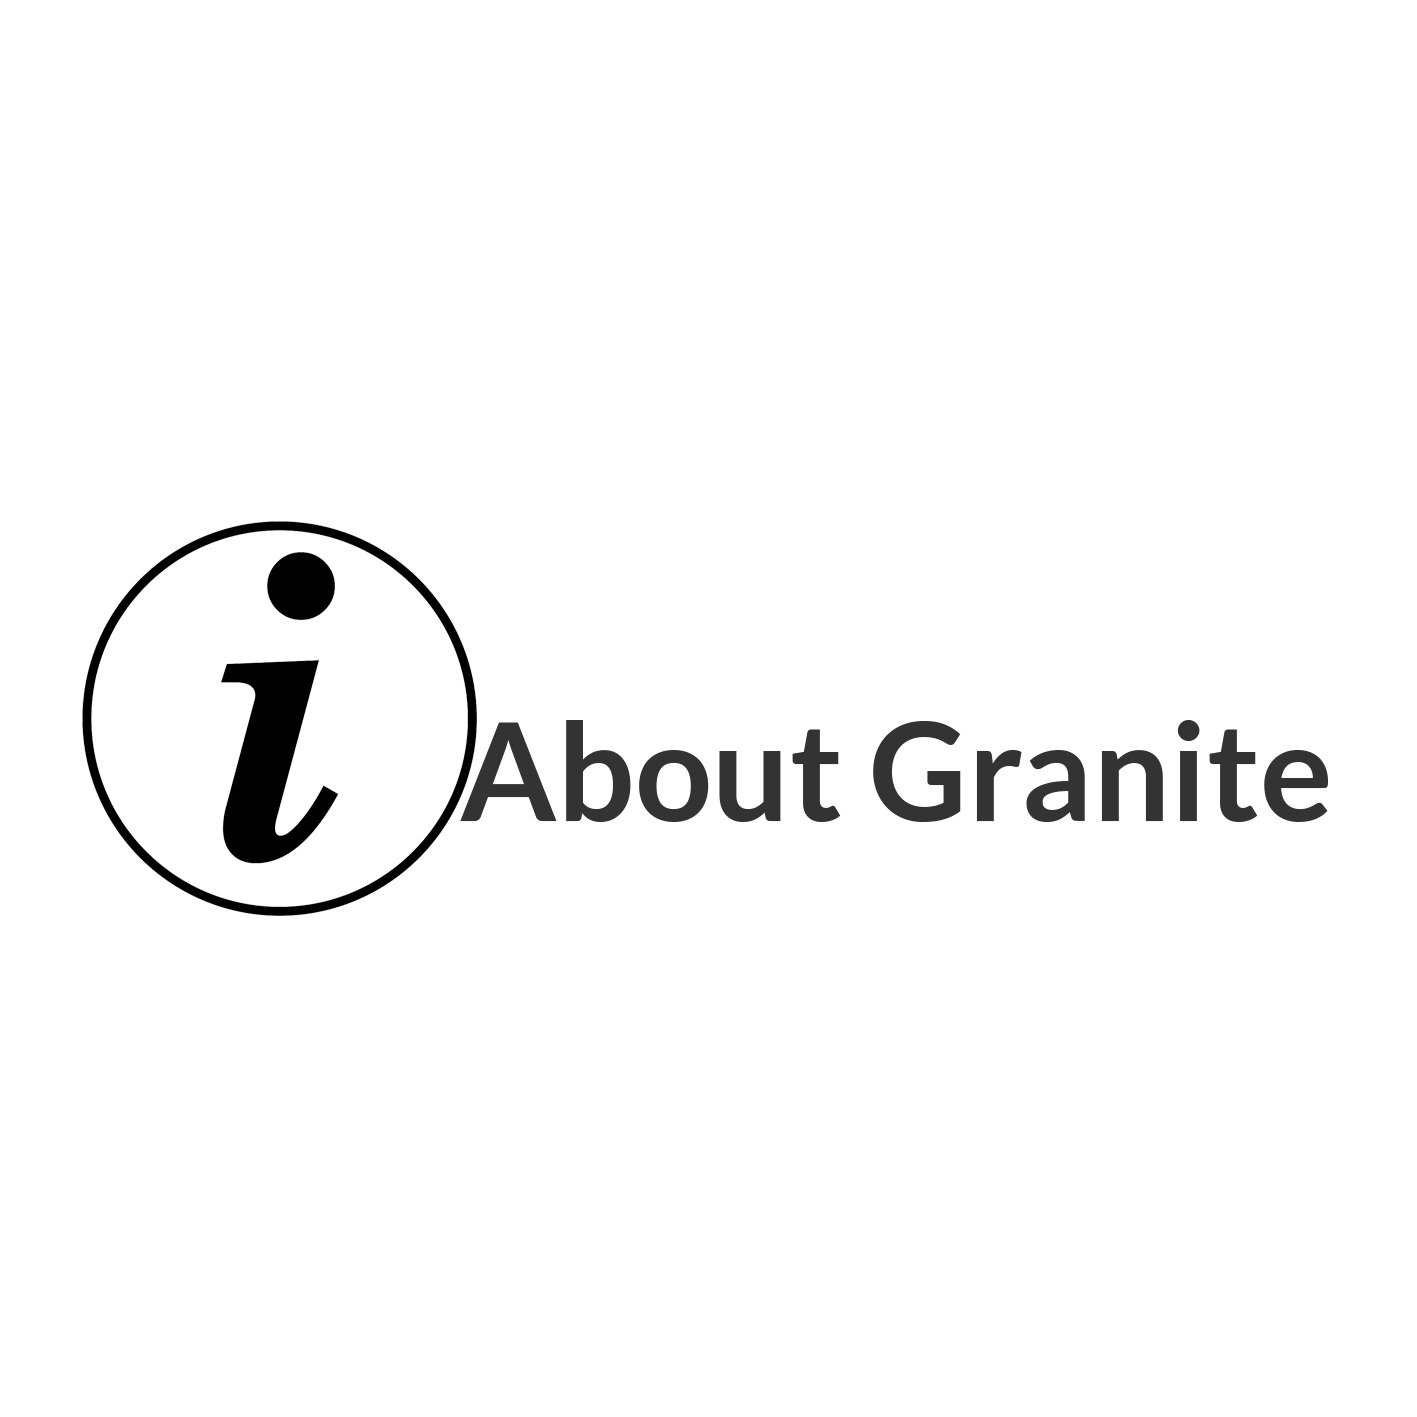 About Granite Worktops